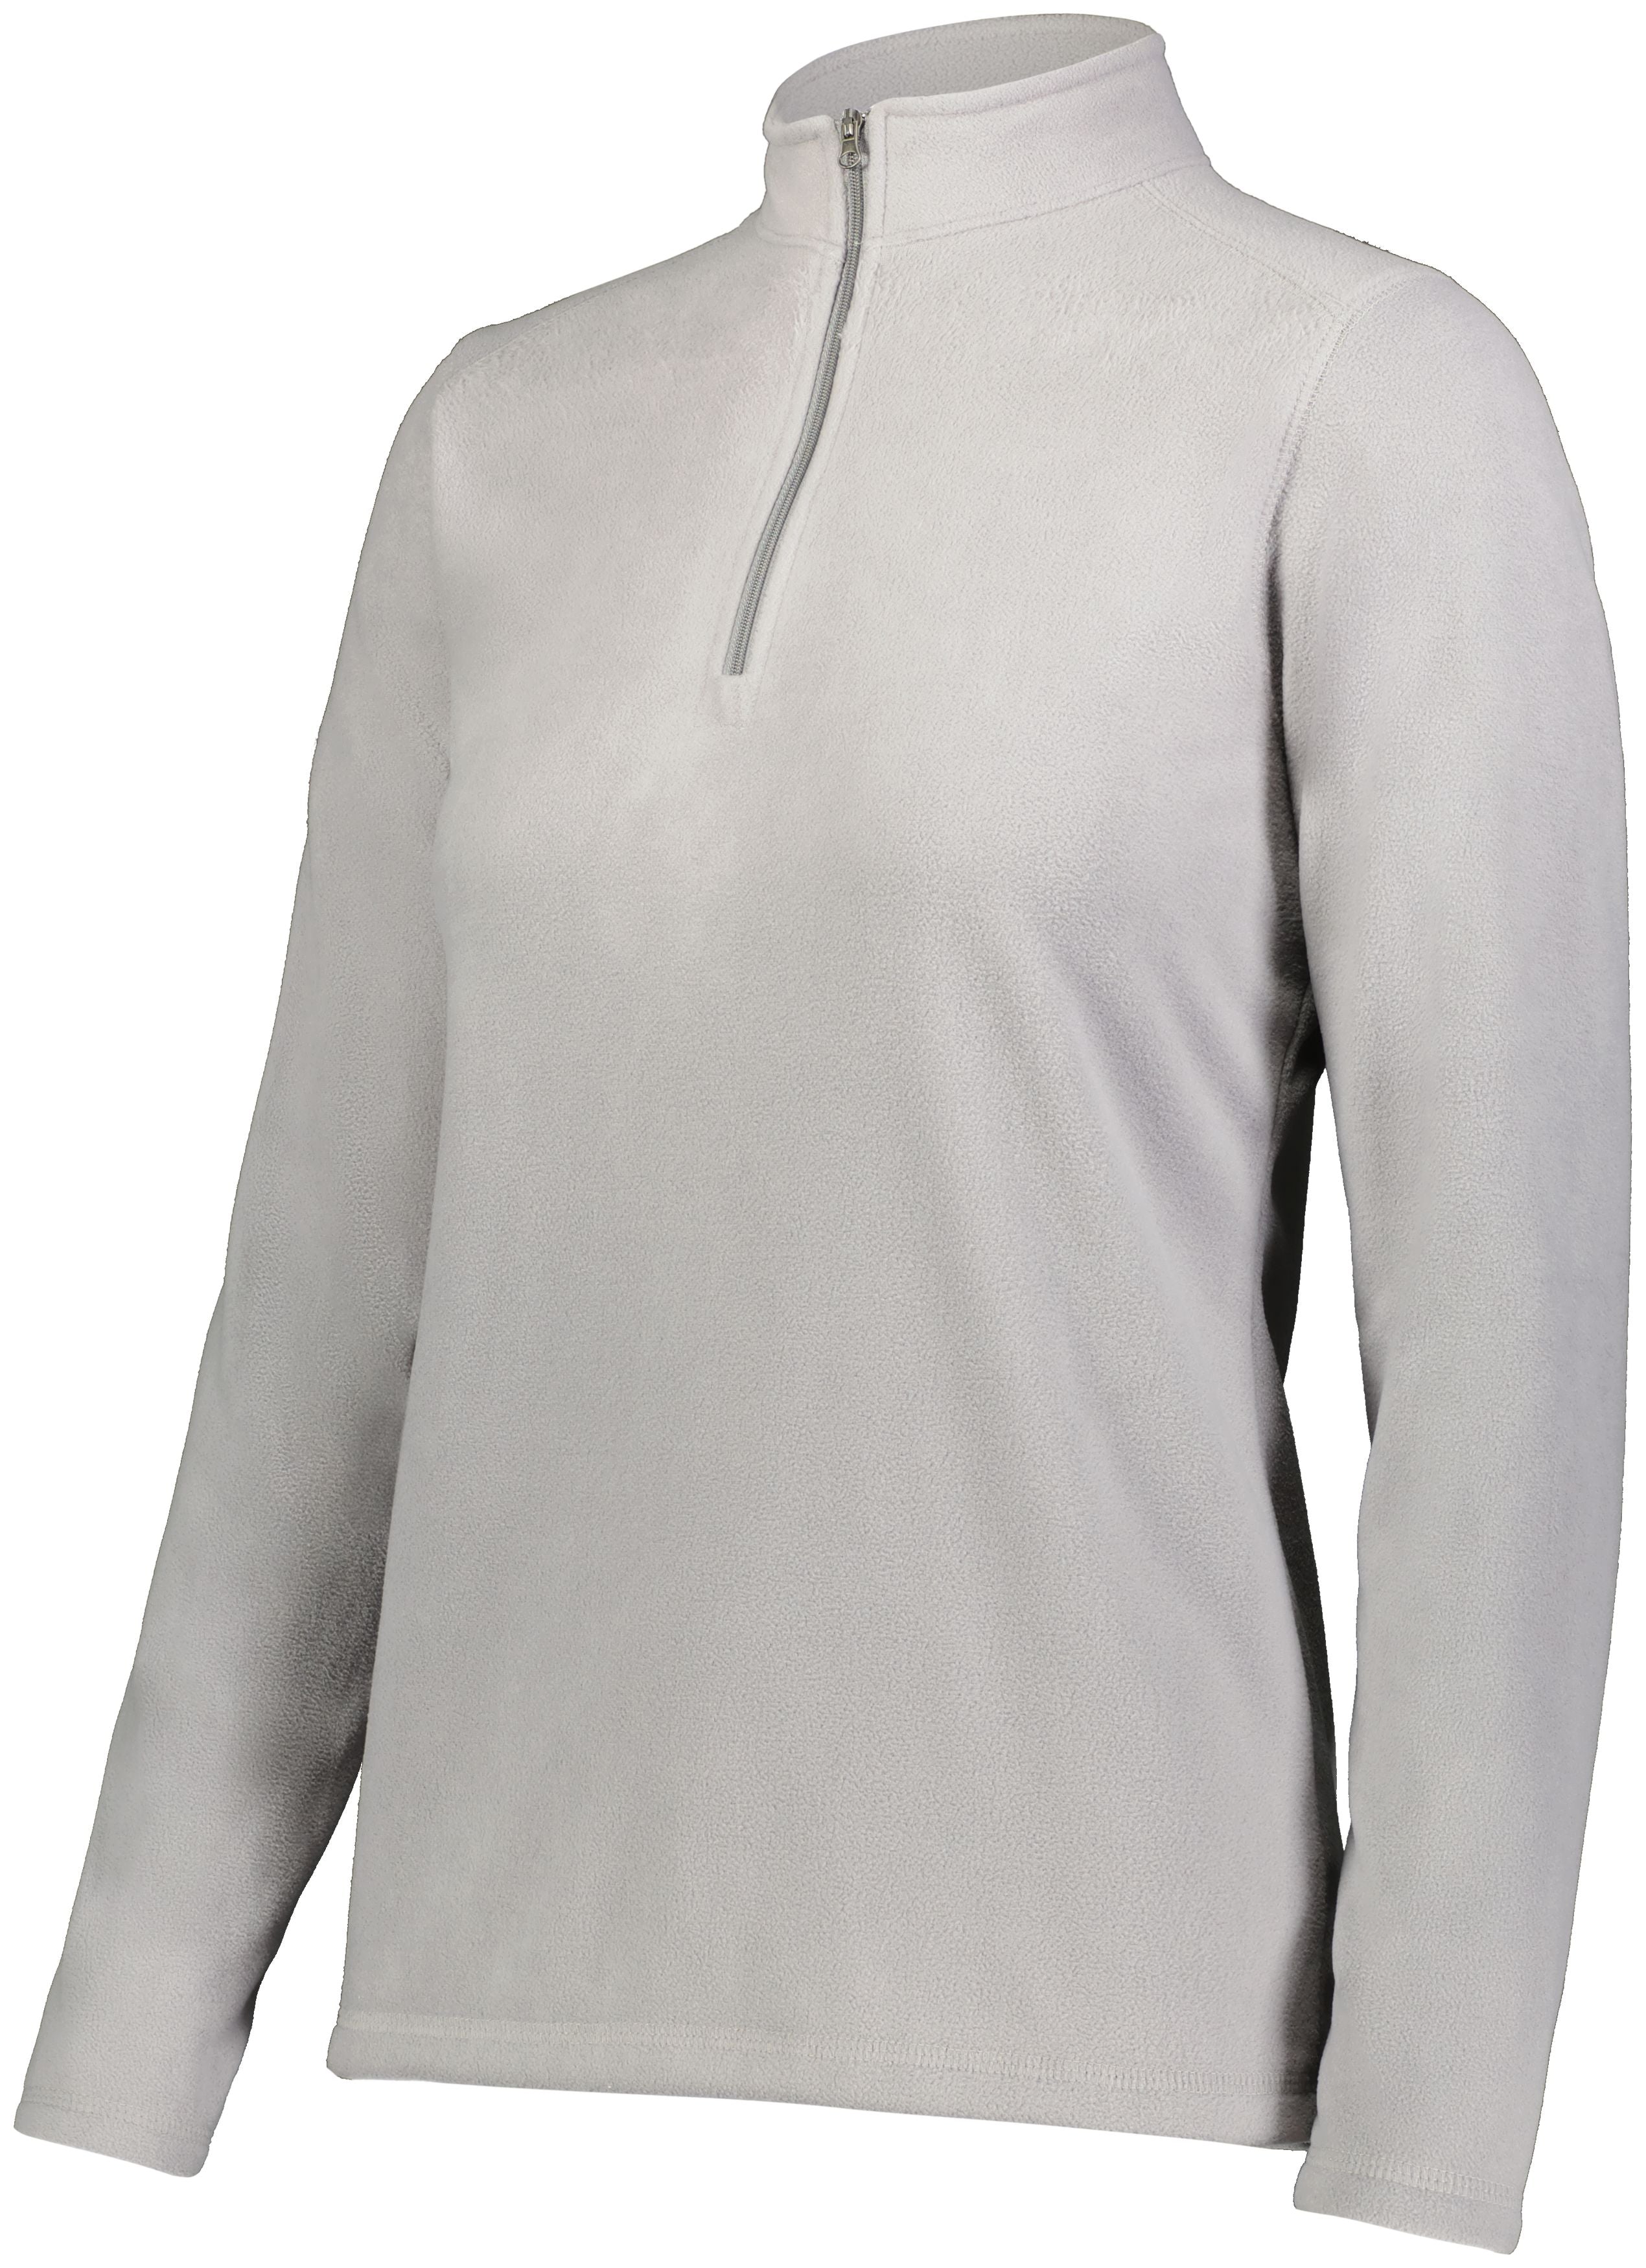 I2) 6864 Augusta Ladies Micro-Lite Fleece 1/4 Zip Pullover - OILQUICK